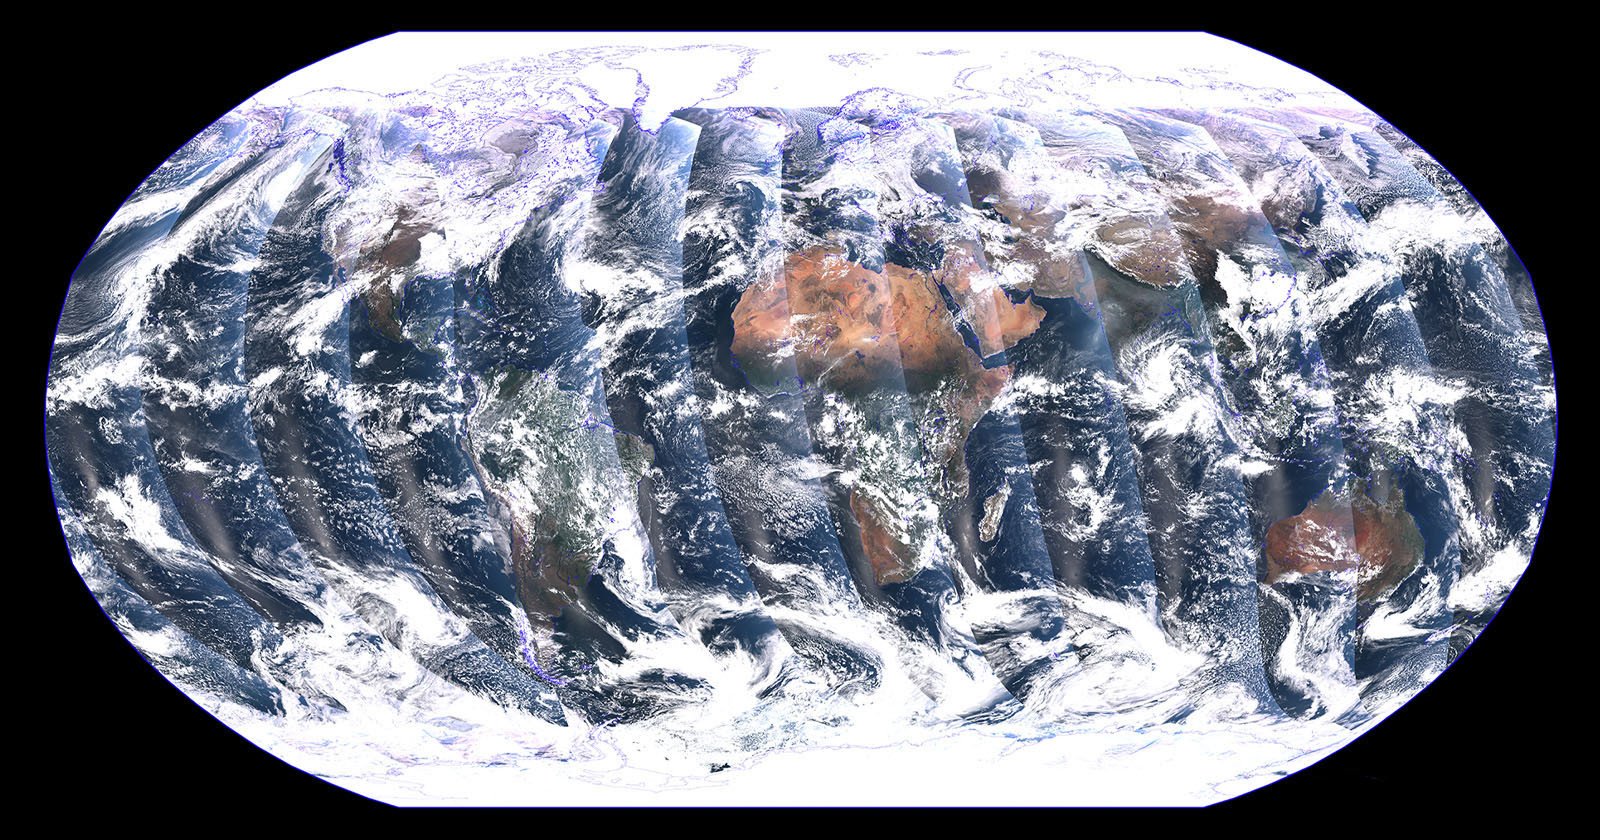 Stunning Mosaic Image of Earth Captured by Polar-Orbiting Satellite